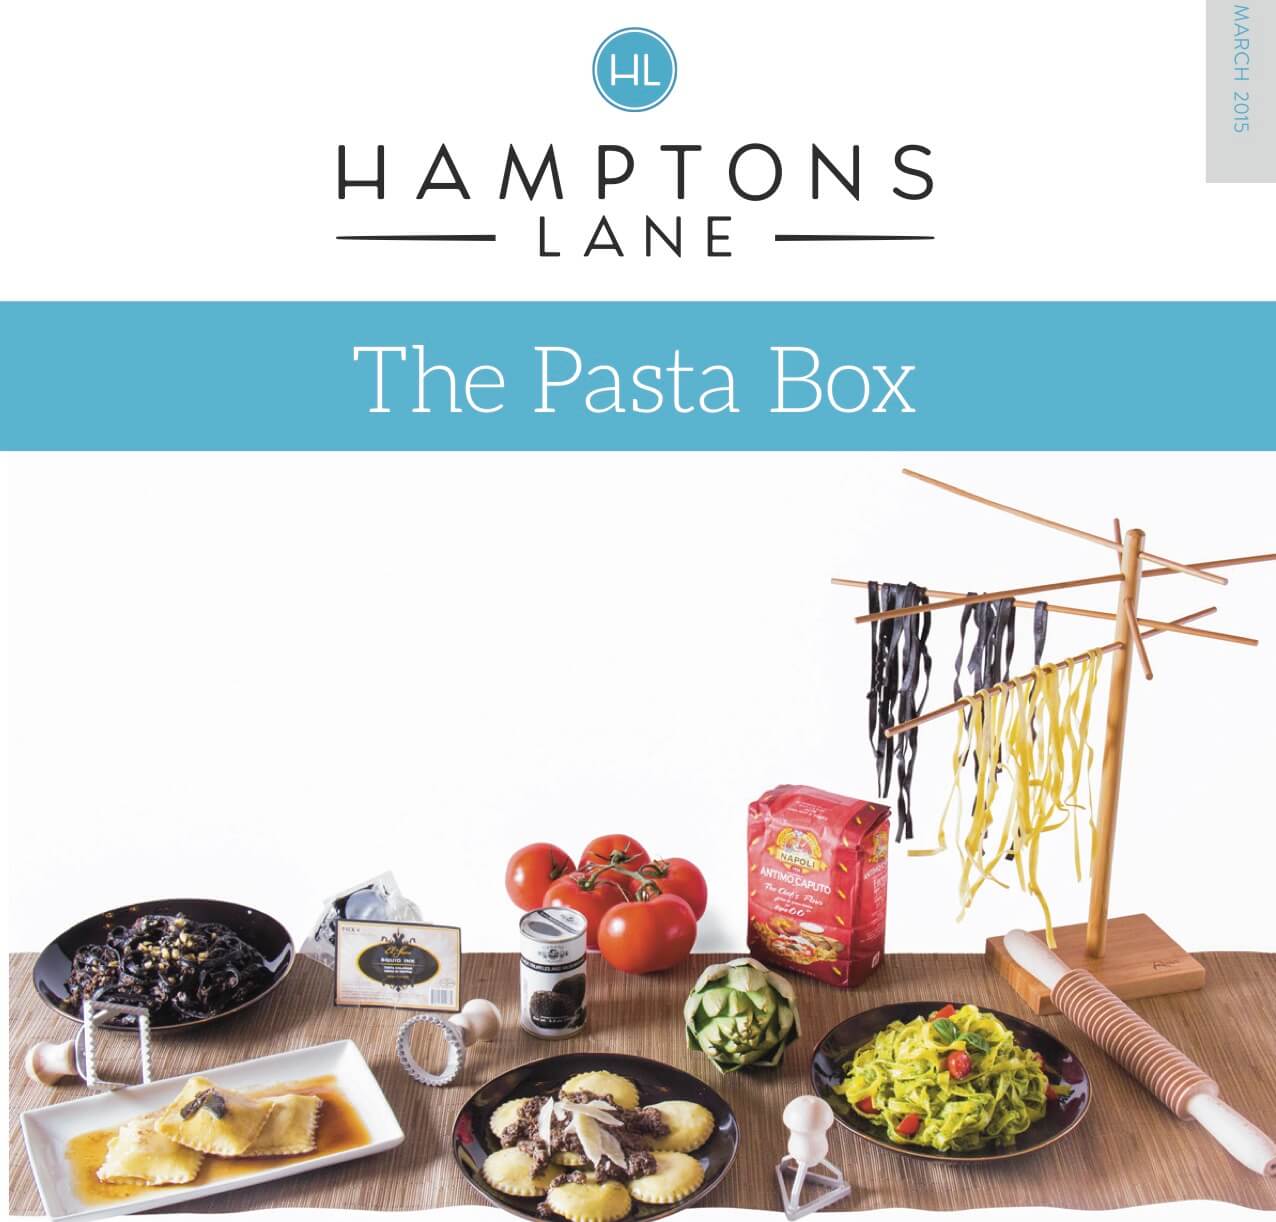 hamptons lane Pasta box march 2015